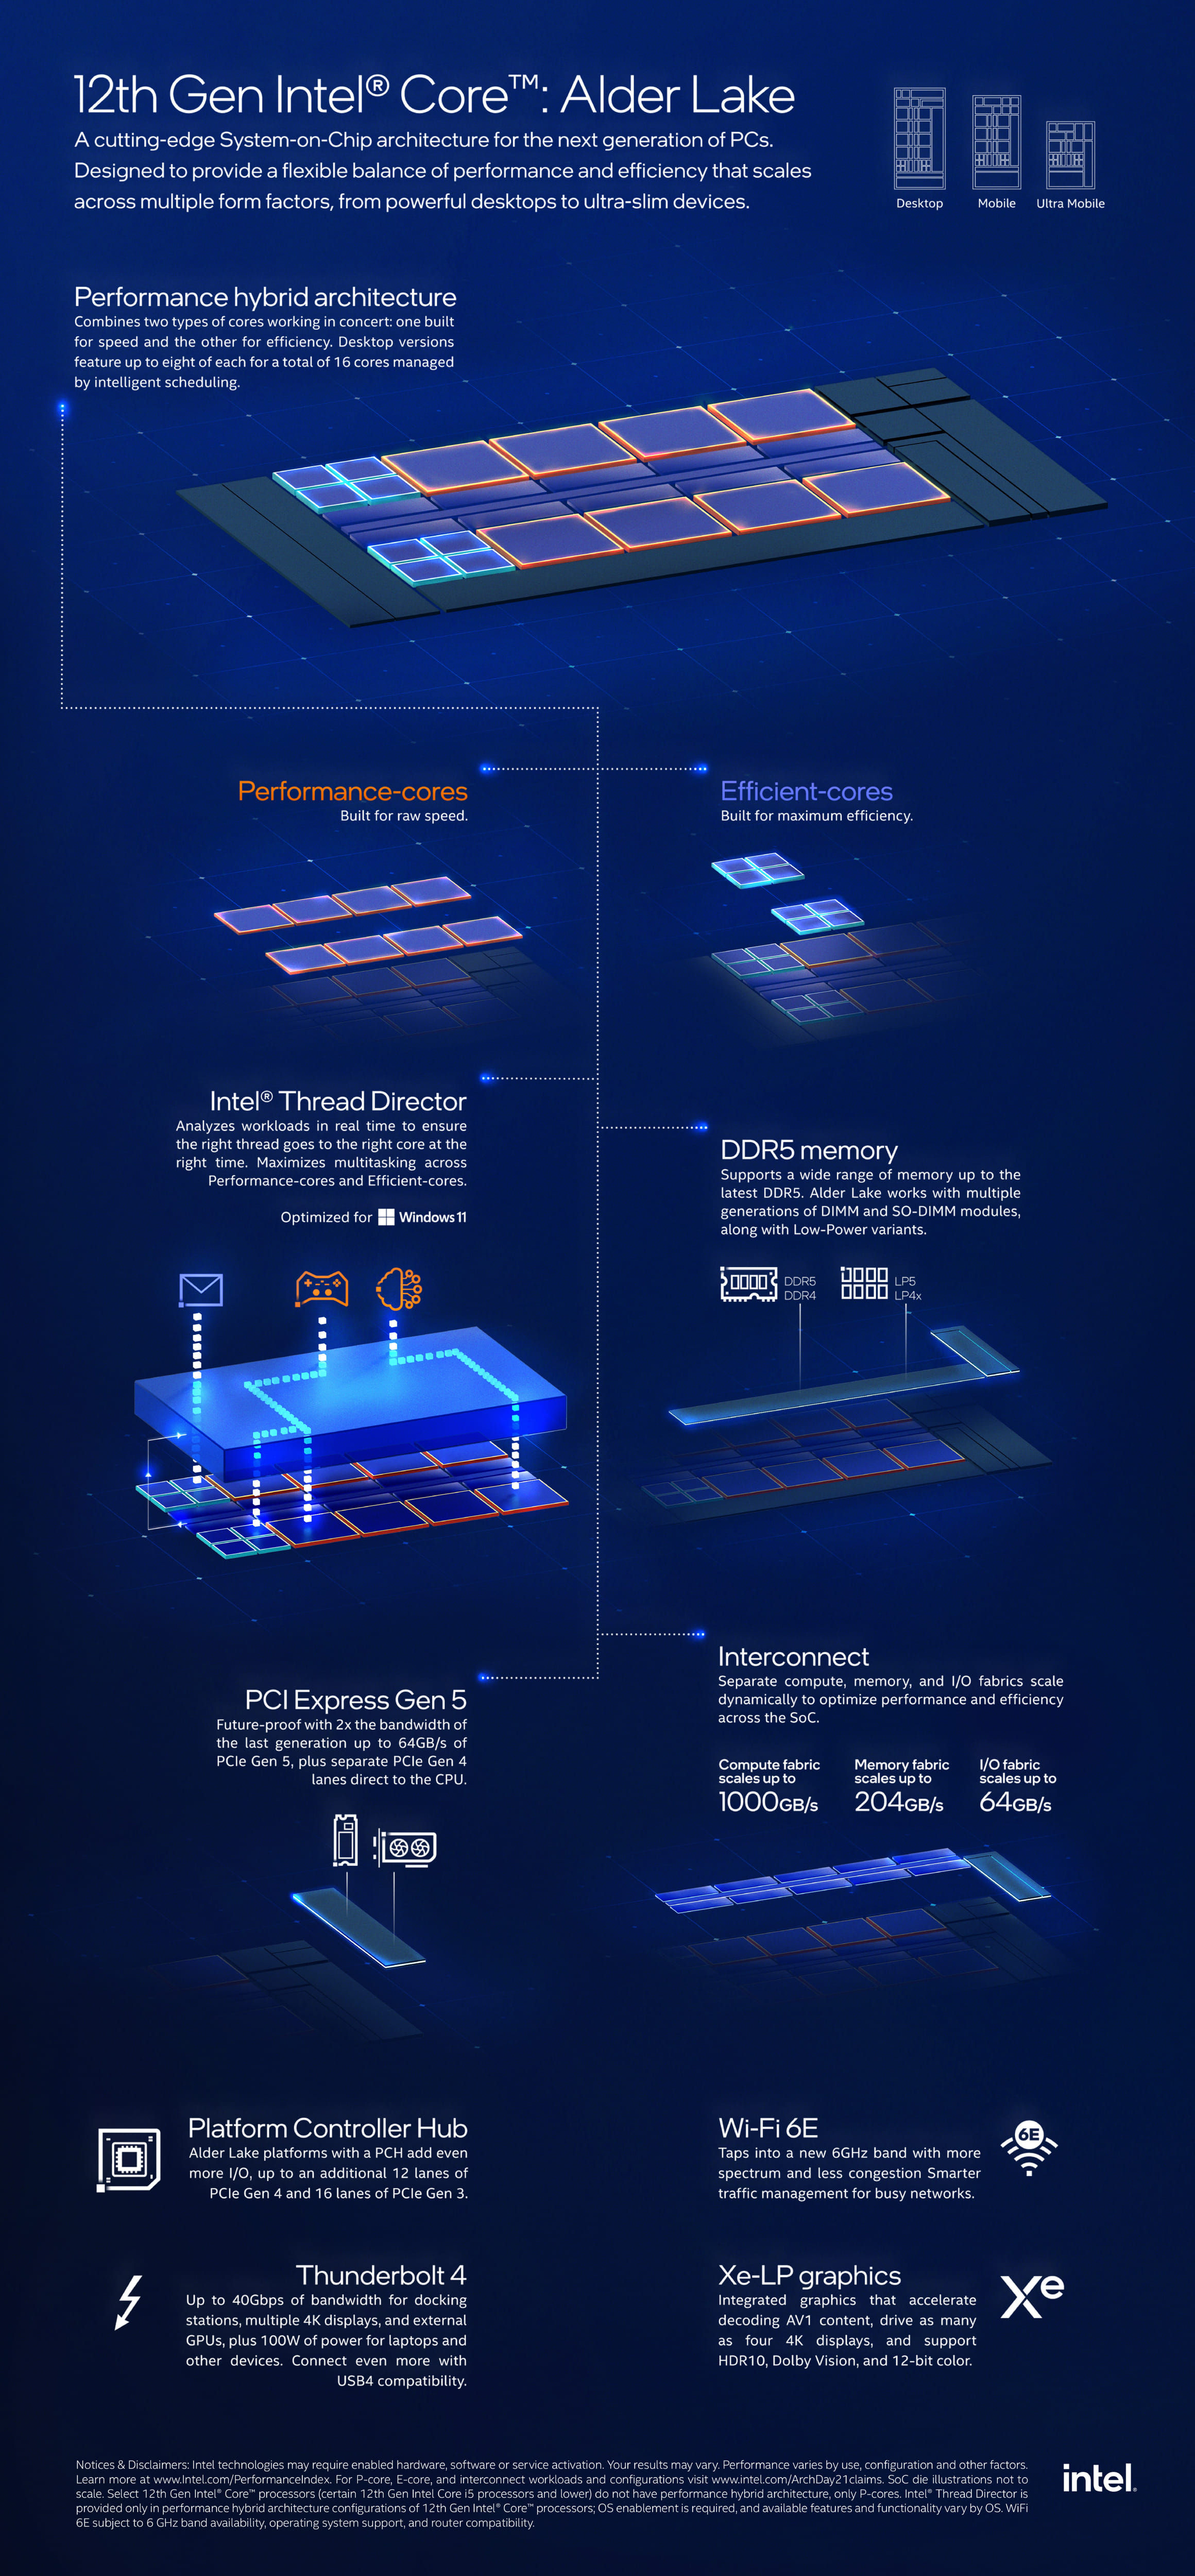 12th Gen Intel Gen Processor Overview